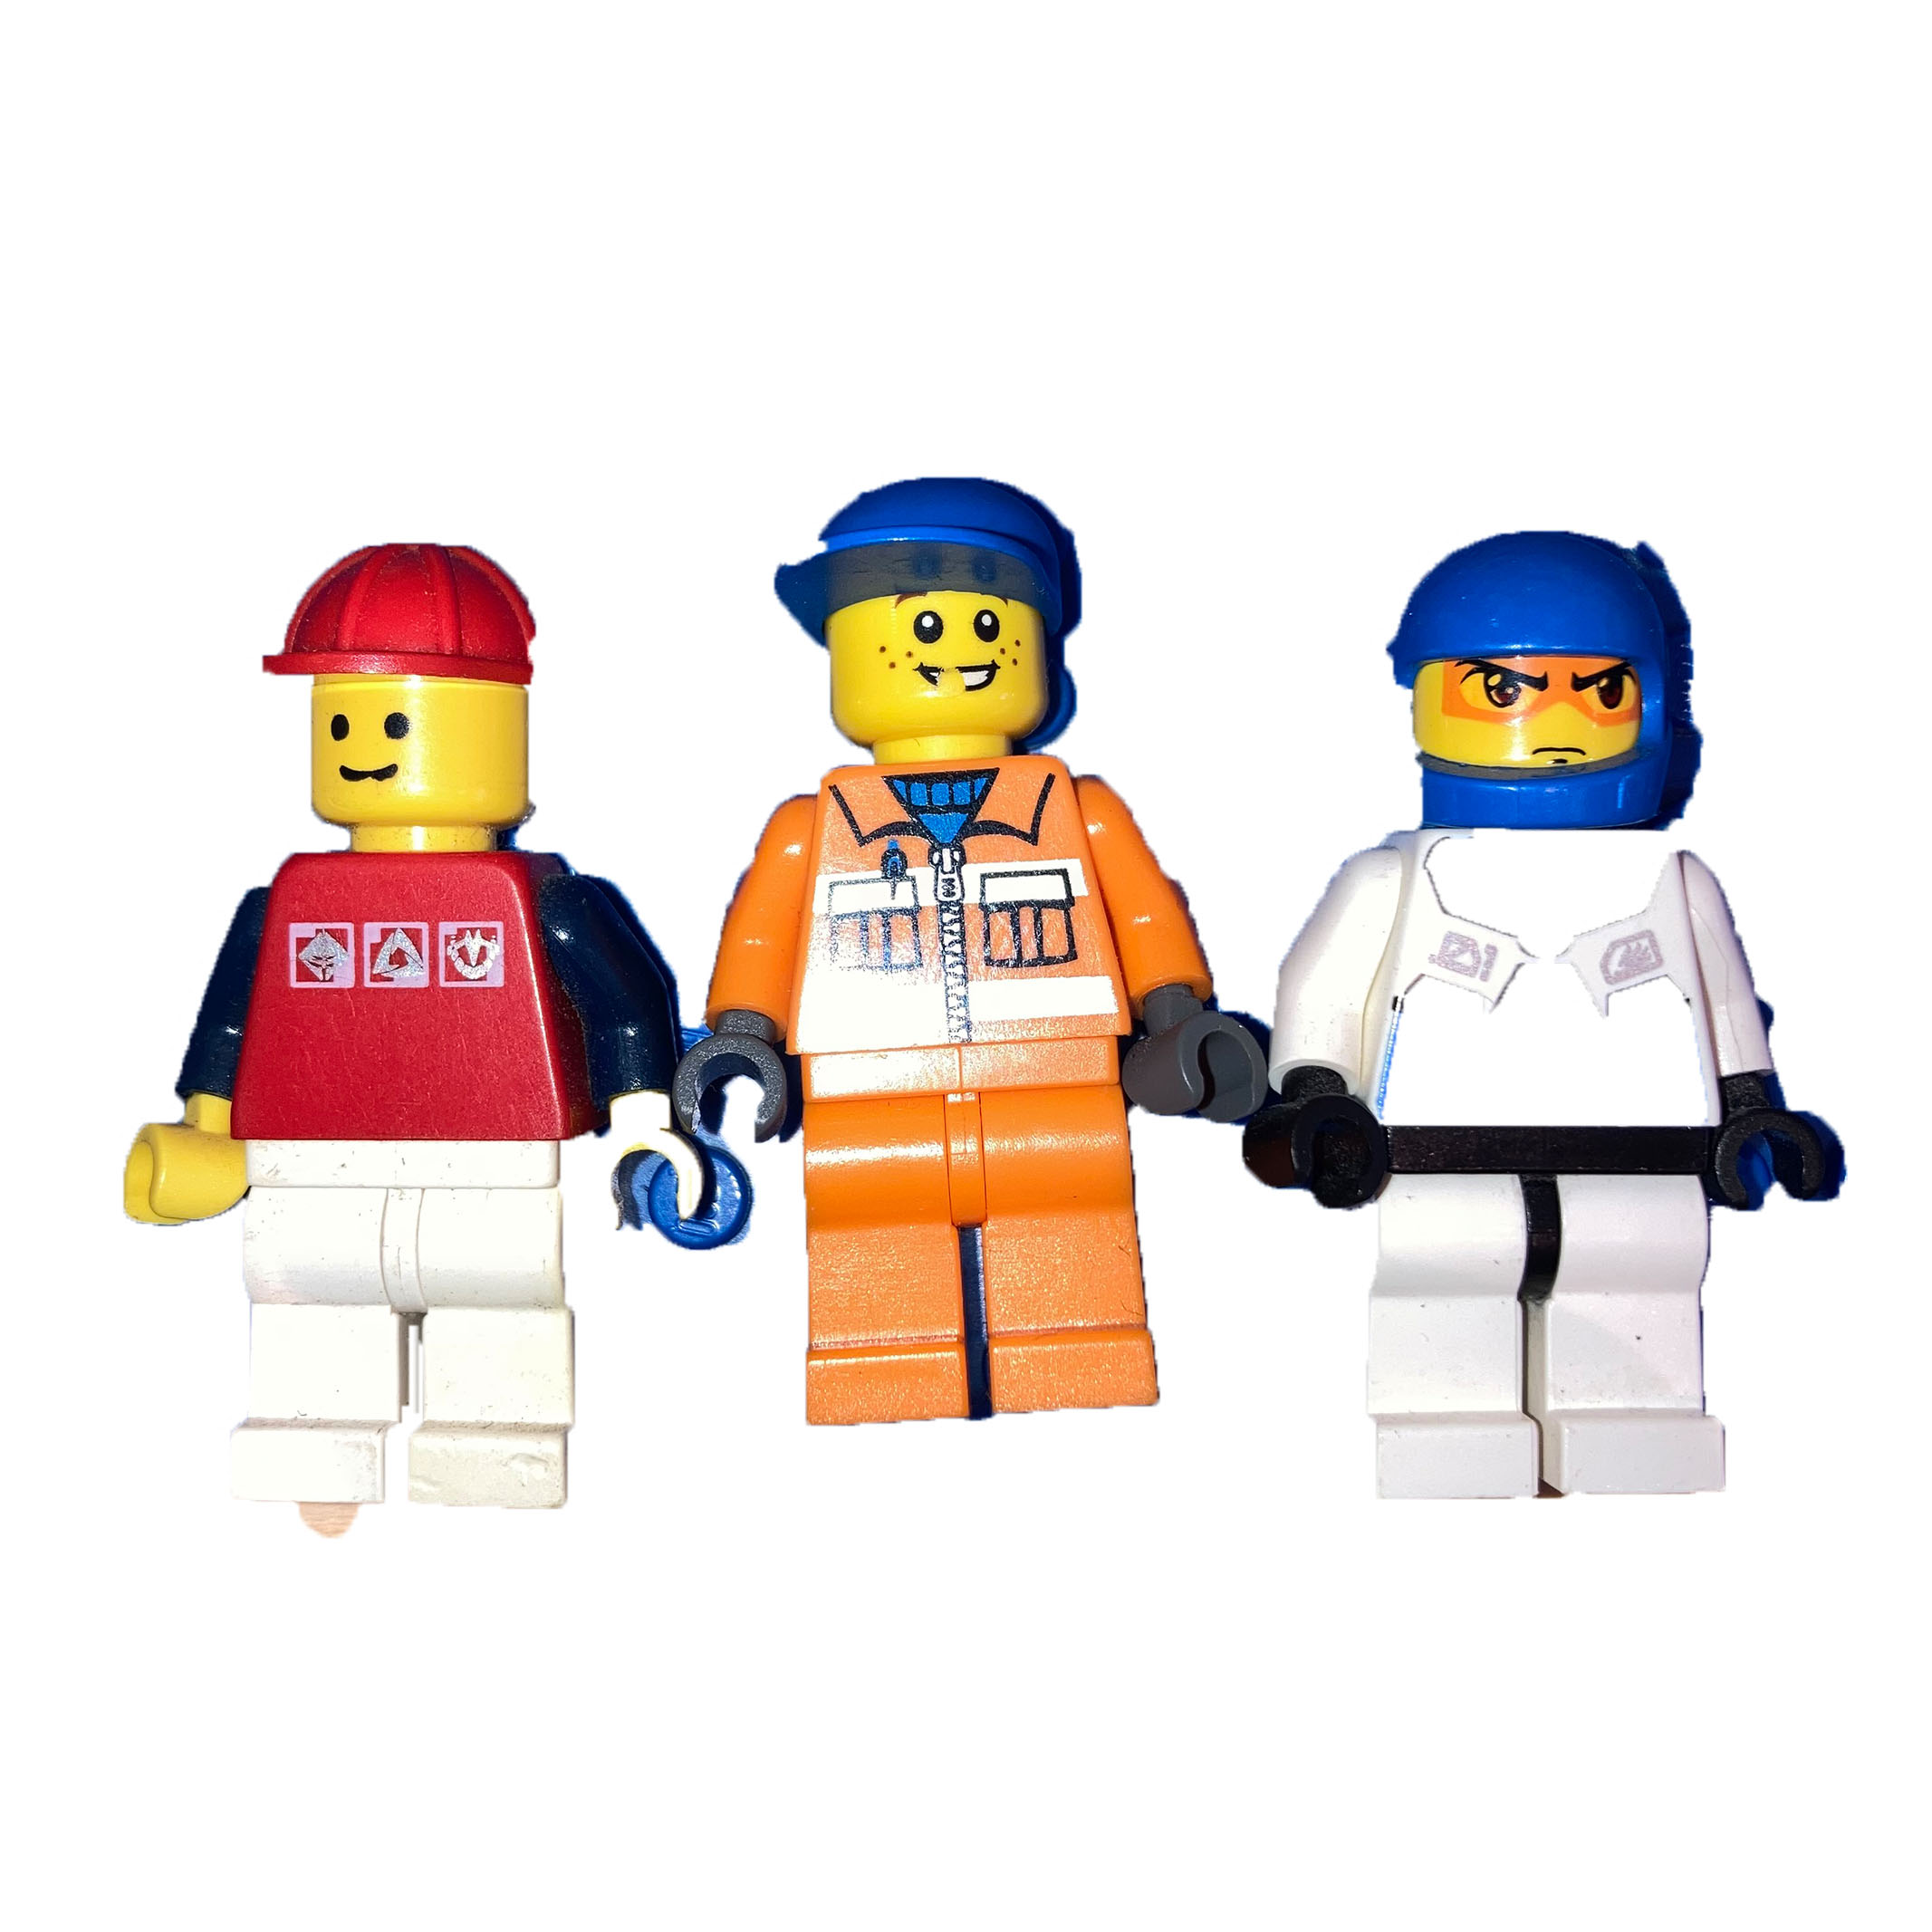 LEGO「ミニフィグ」